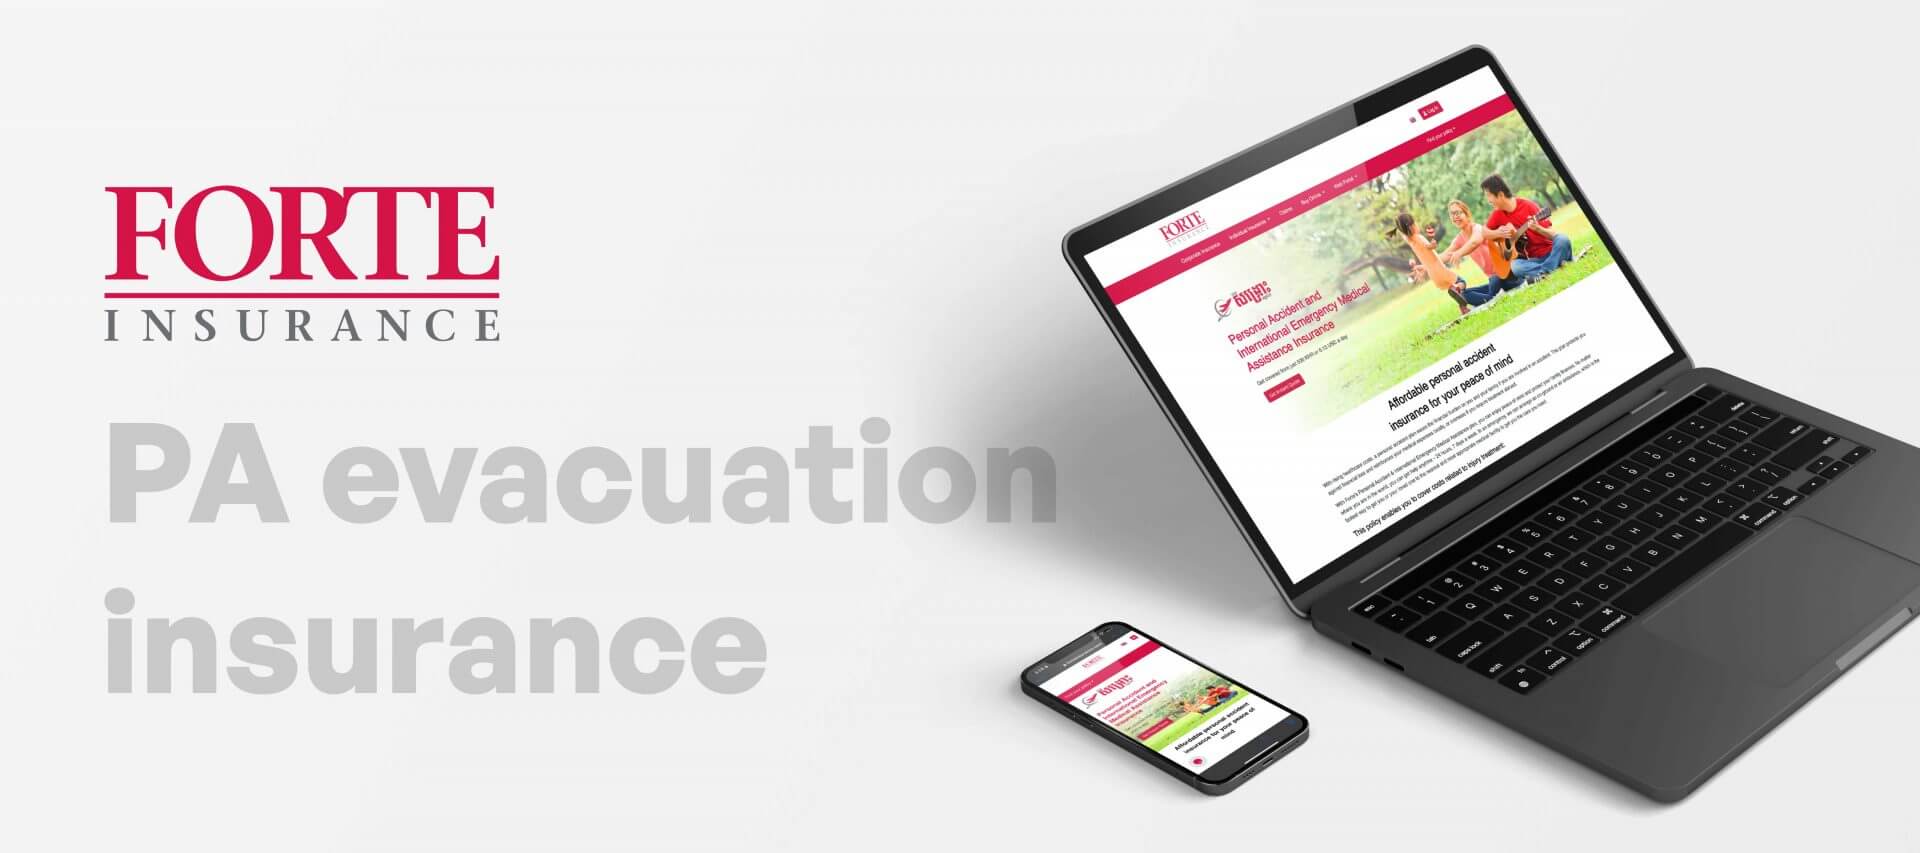 Forte Insurance : PA Evacuation Insurance Website Design